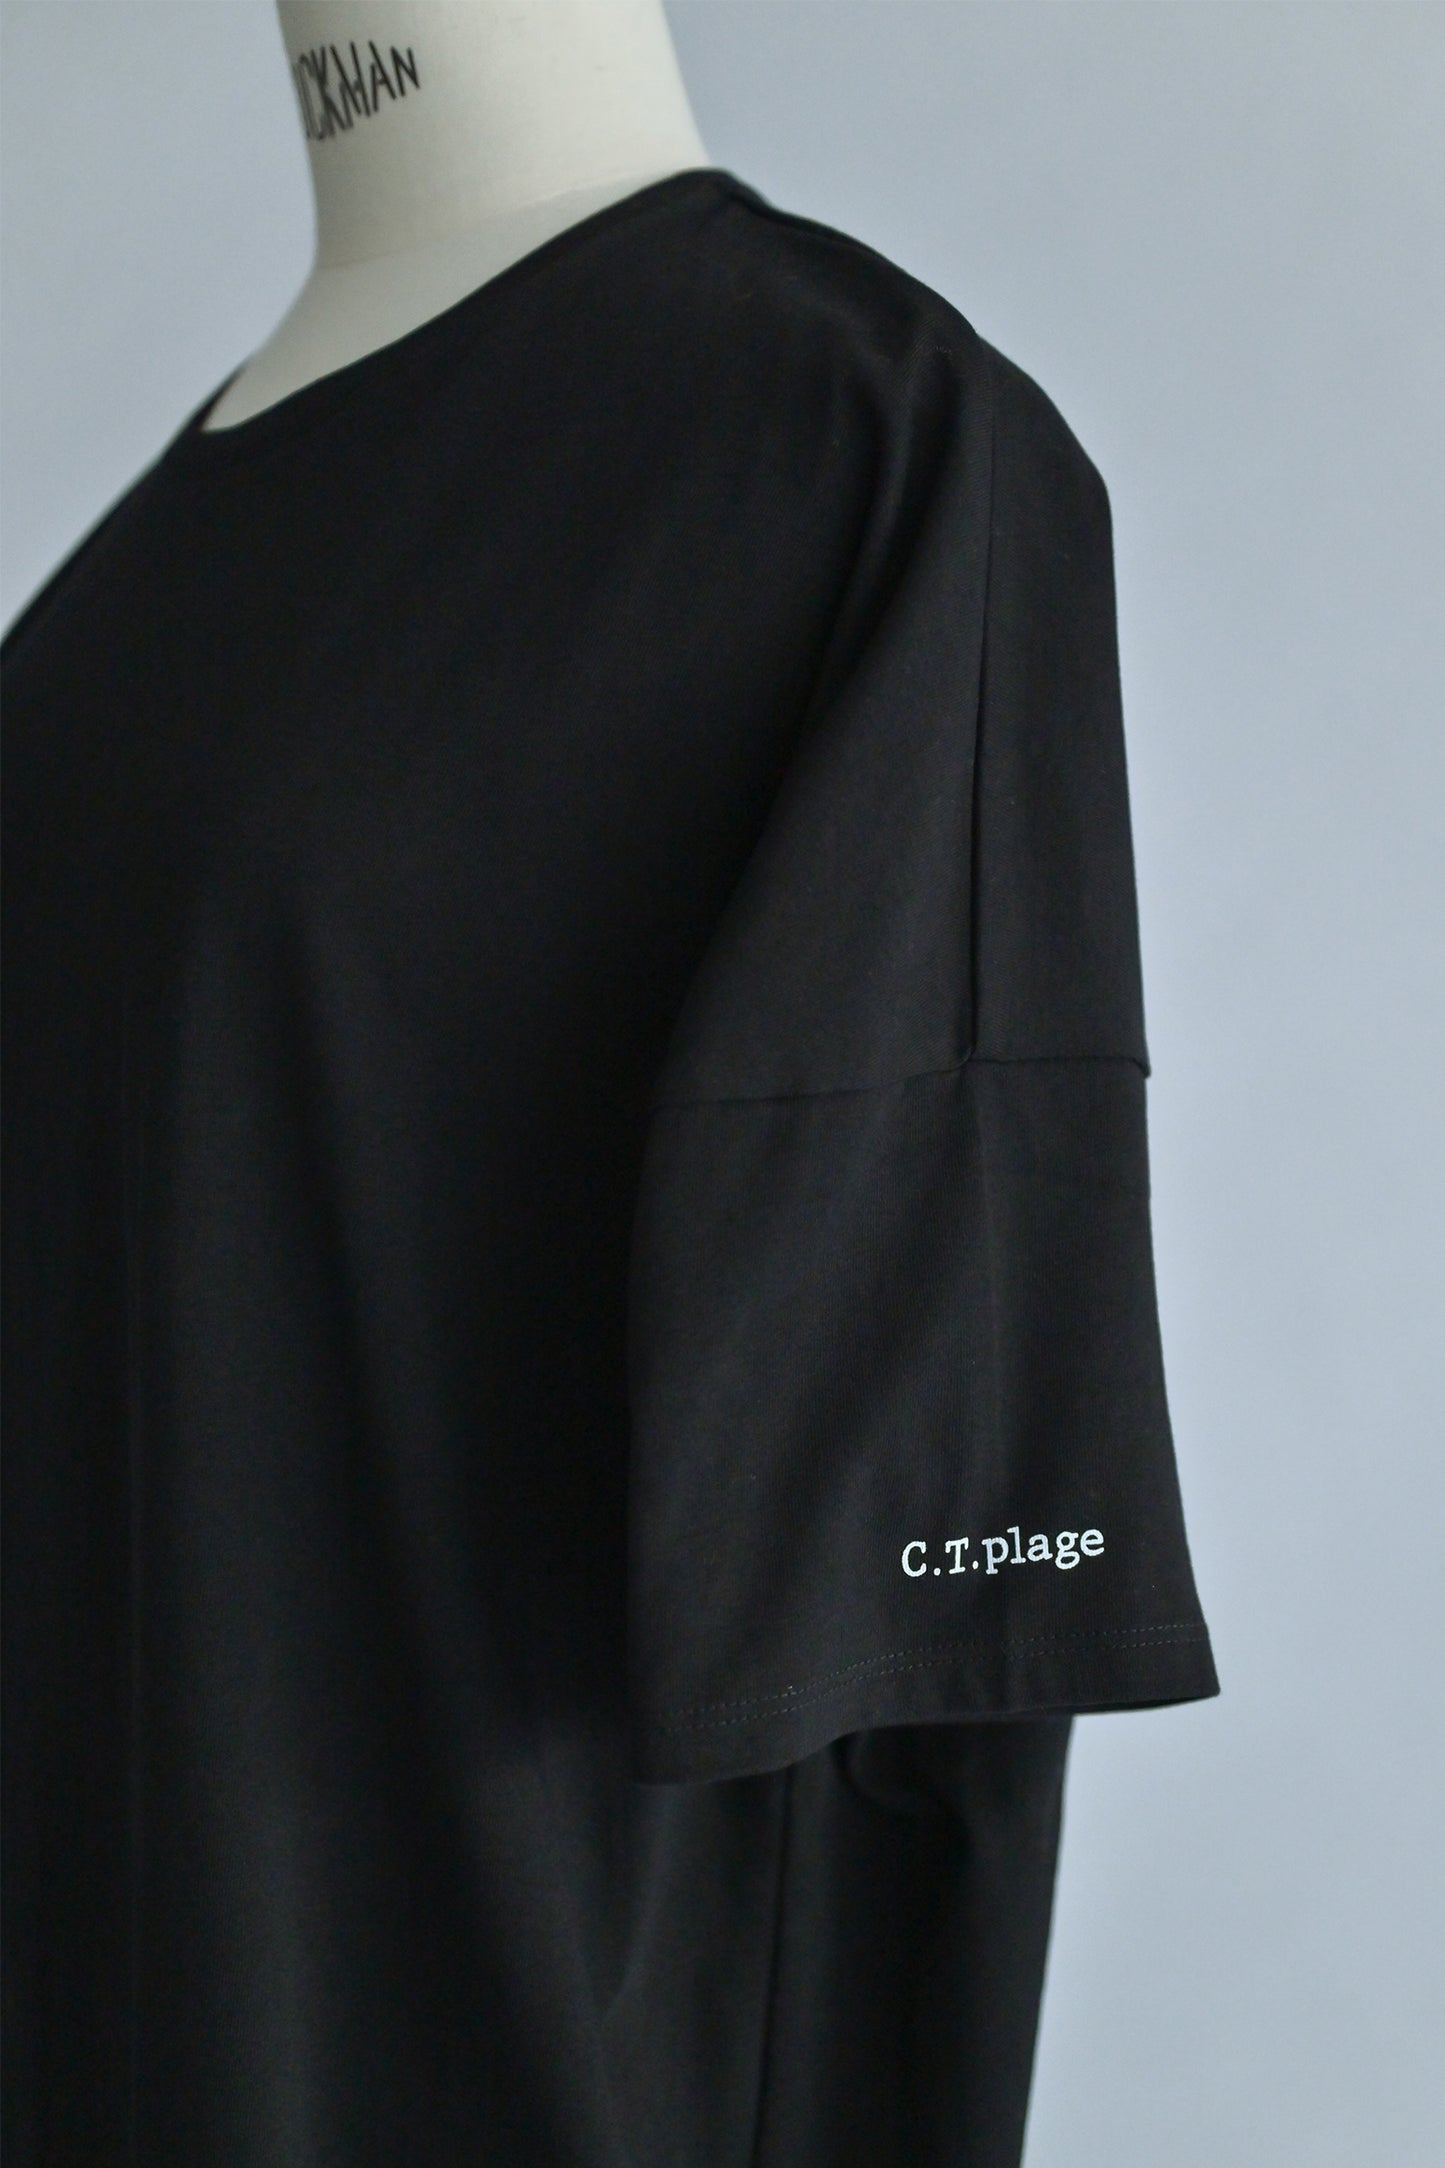 C.T.plage logo Cotton jersey dress/ CT23302